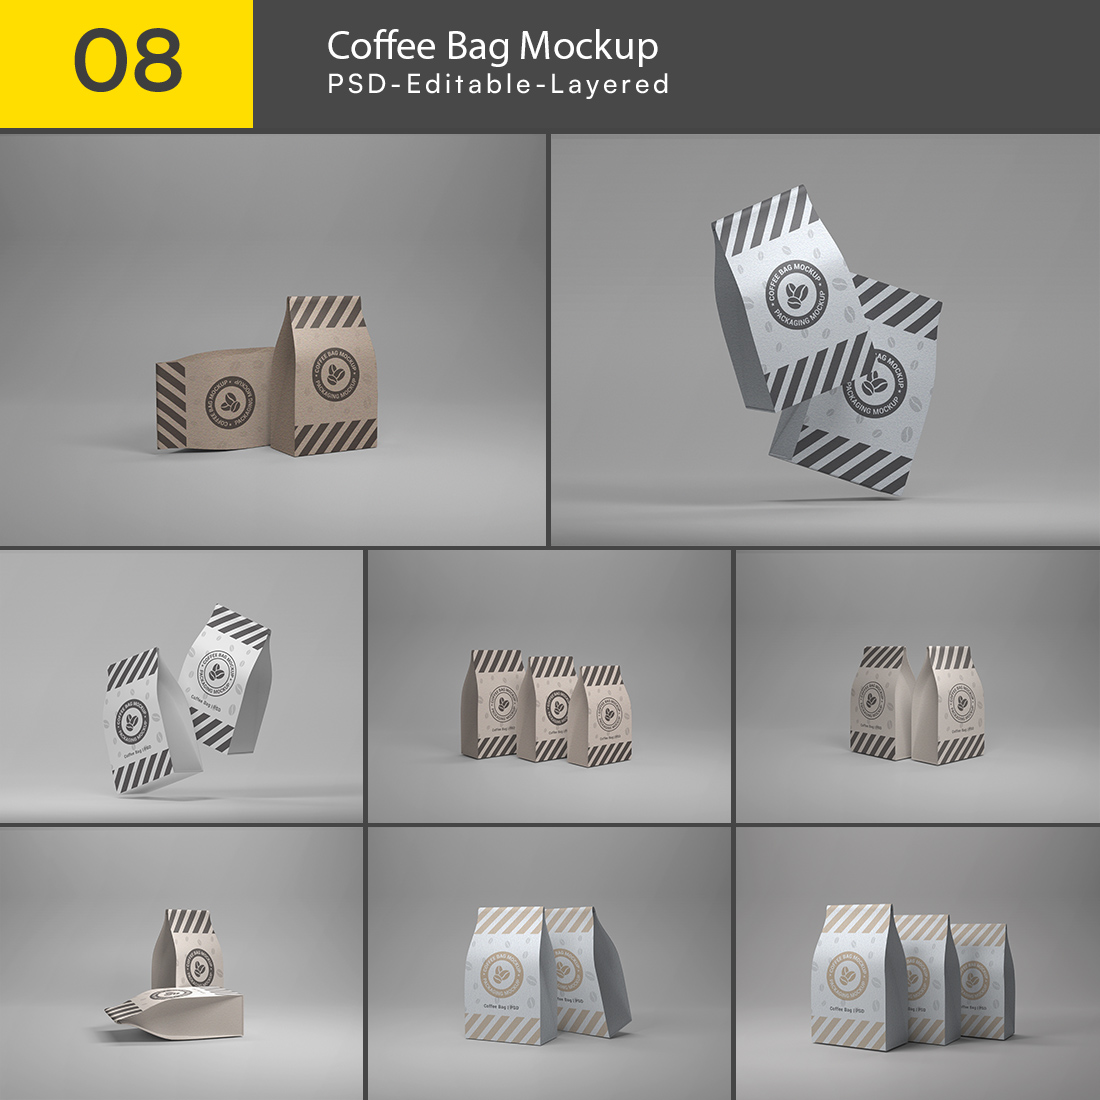 Coffee Packaging Bag Mockup cover image.